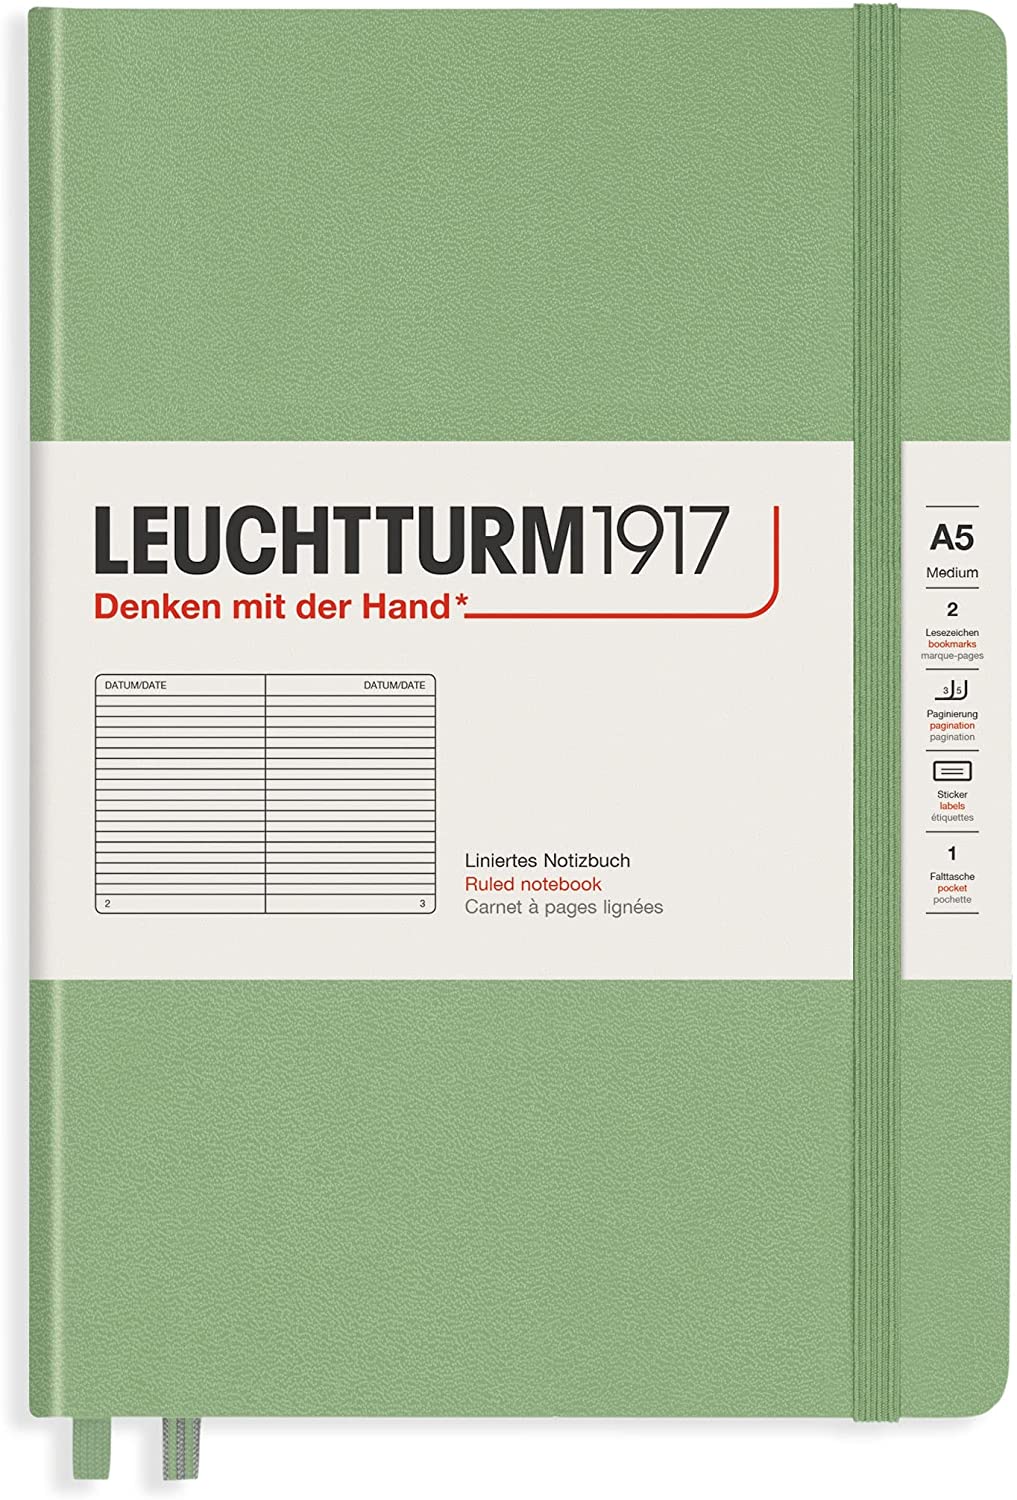 leuchtturm 1917, how to improve handwriting as an adult